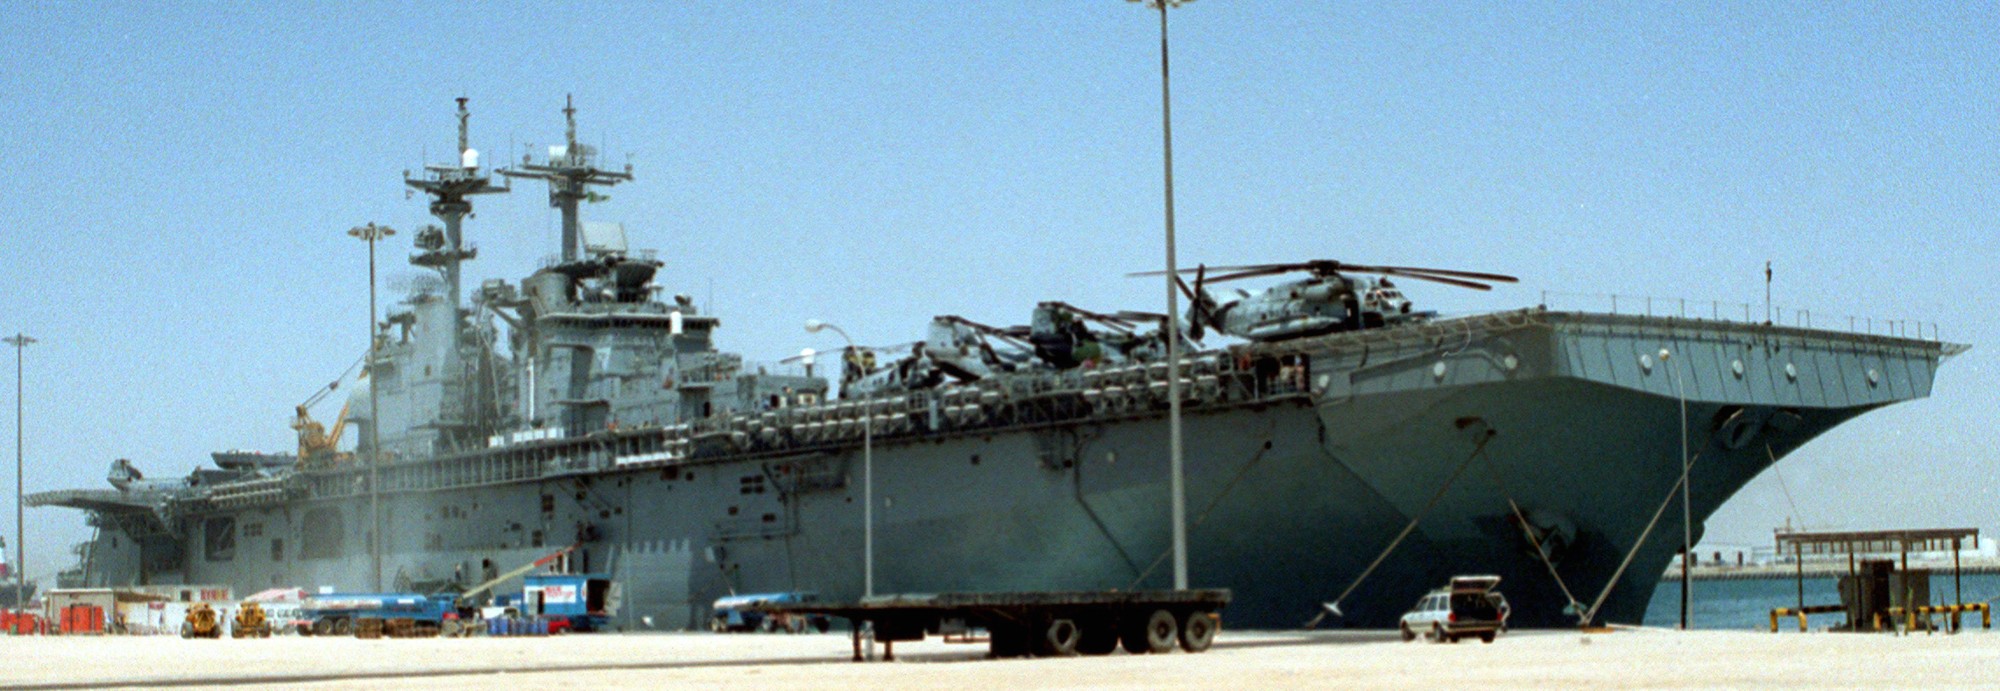 lhd-1 uss wasp amphibious assault landing ship dock helicopter us navy jebel ali uae 91